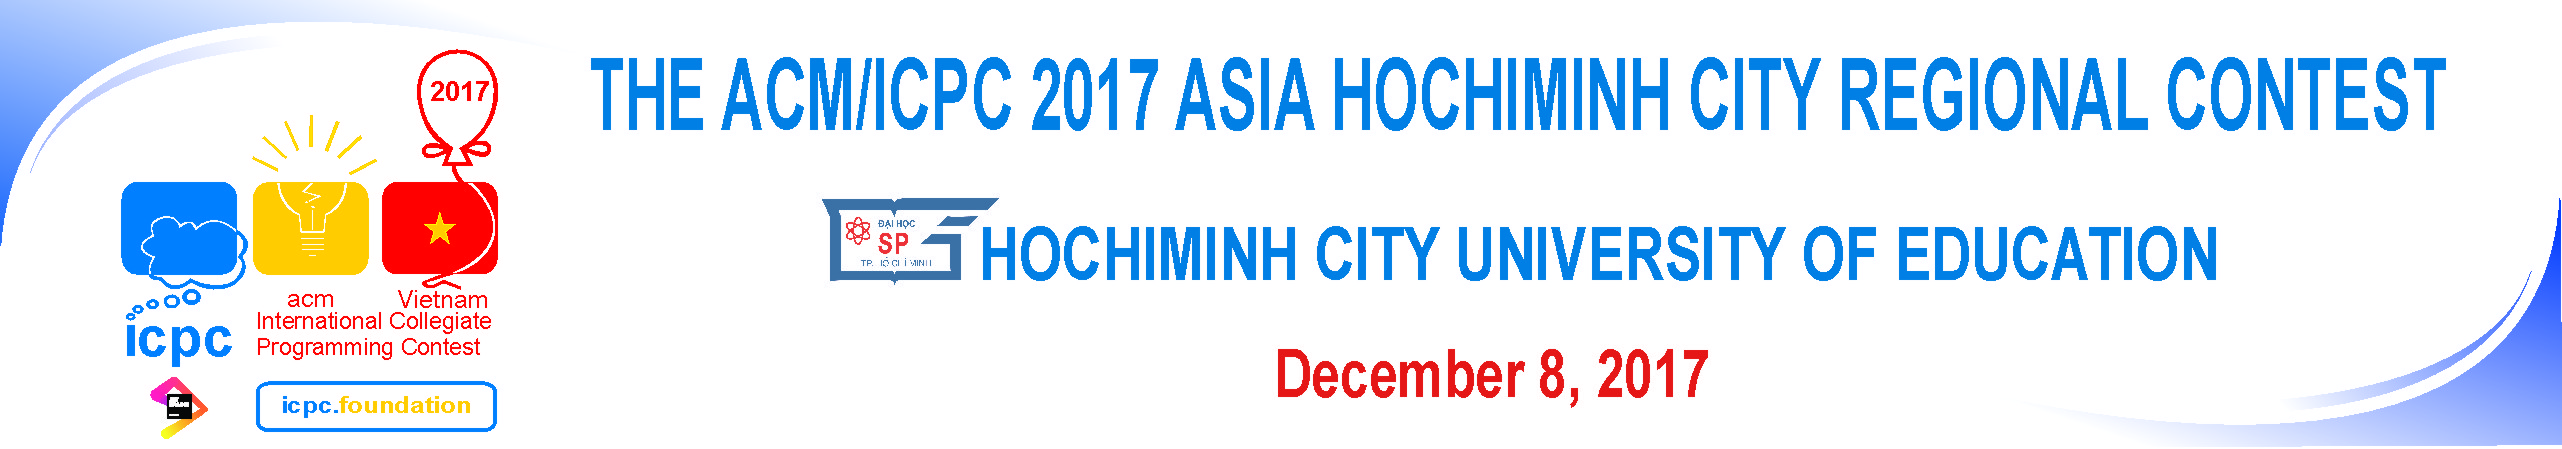 2017 Ho Chi Minh City Regional Contest